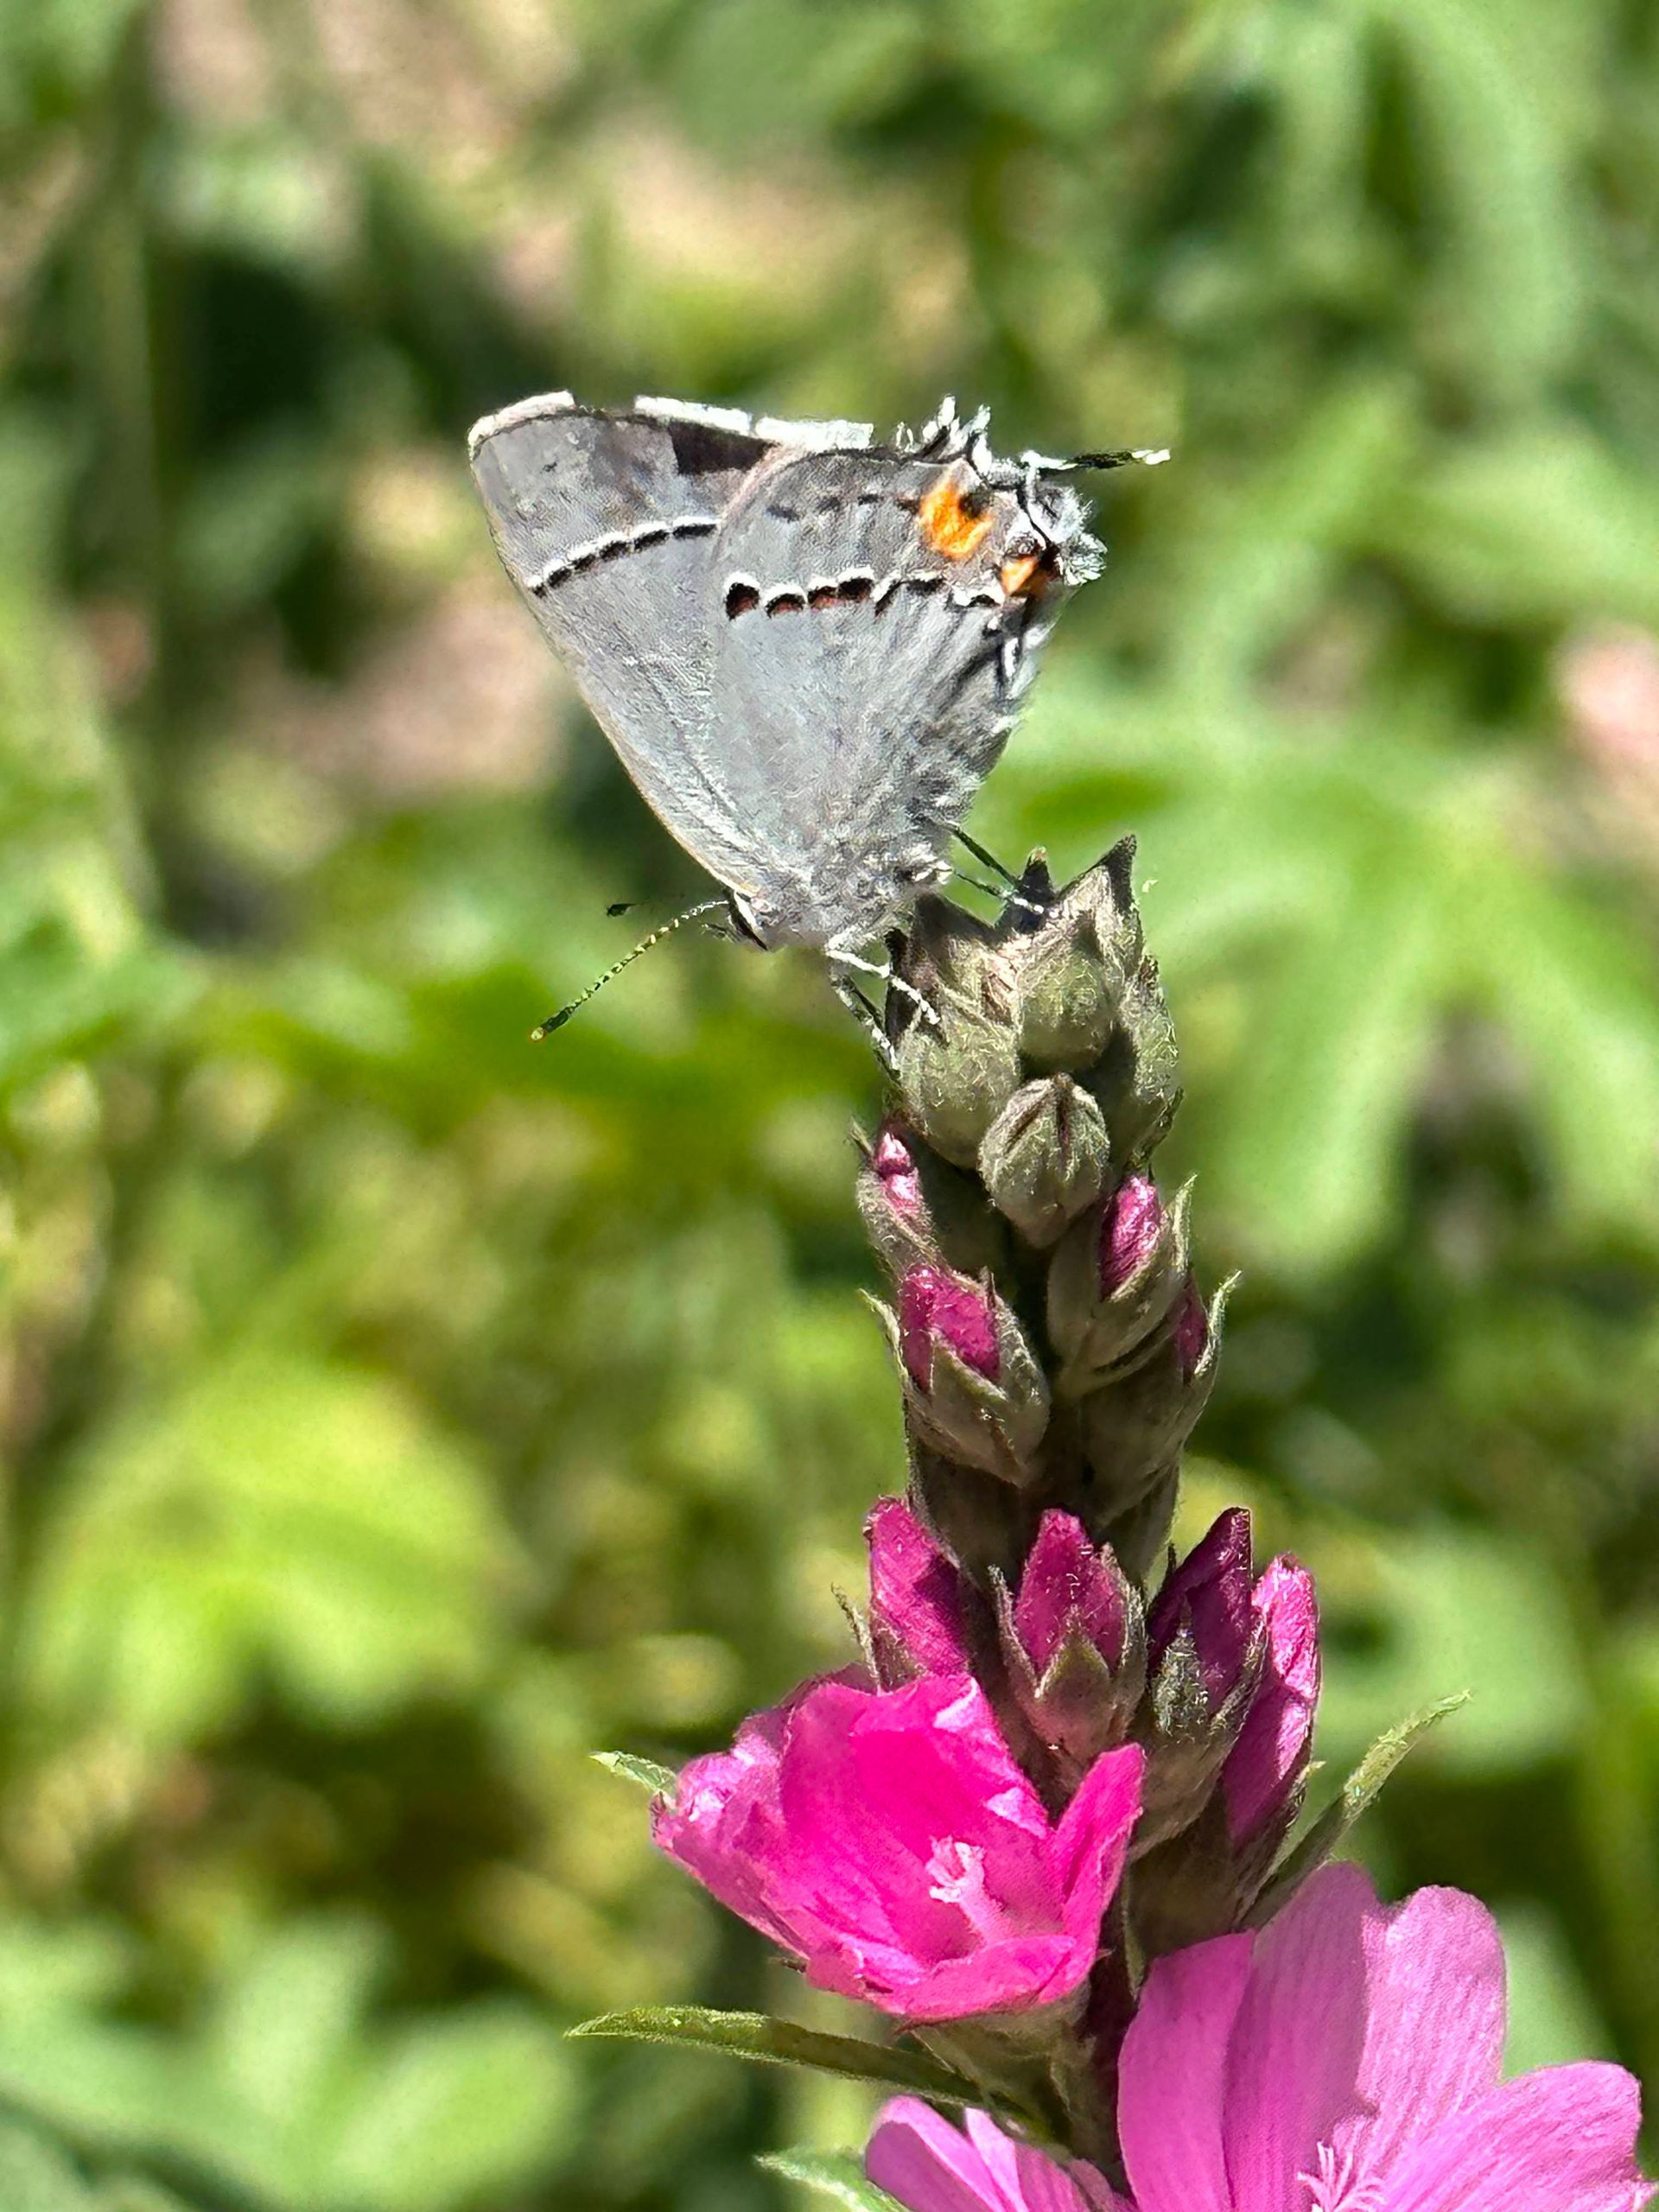 Hairstreak butterfly on checkermallow pollinator plant